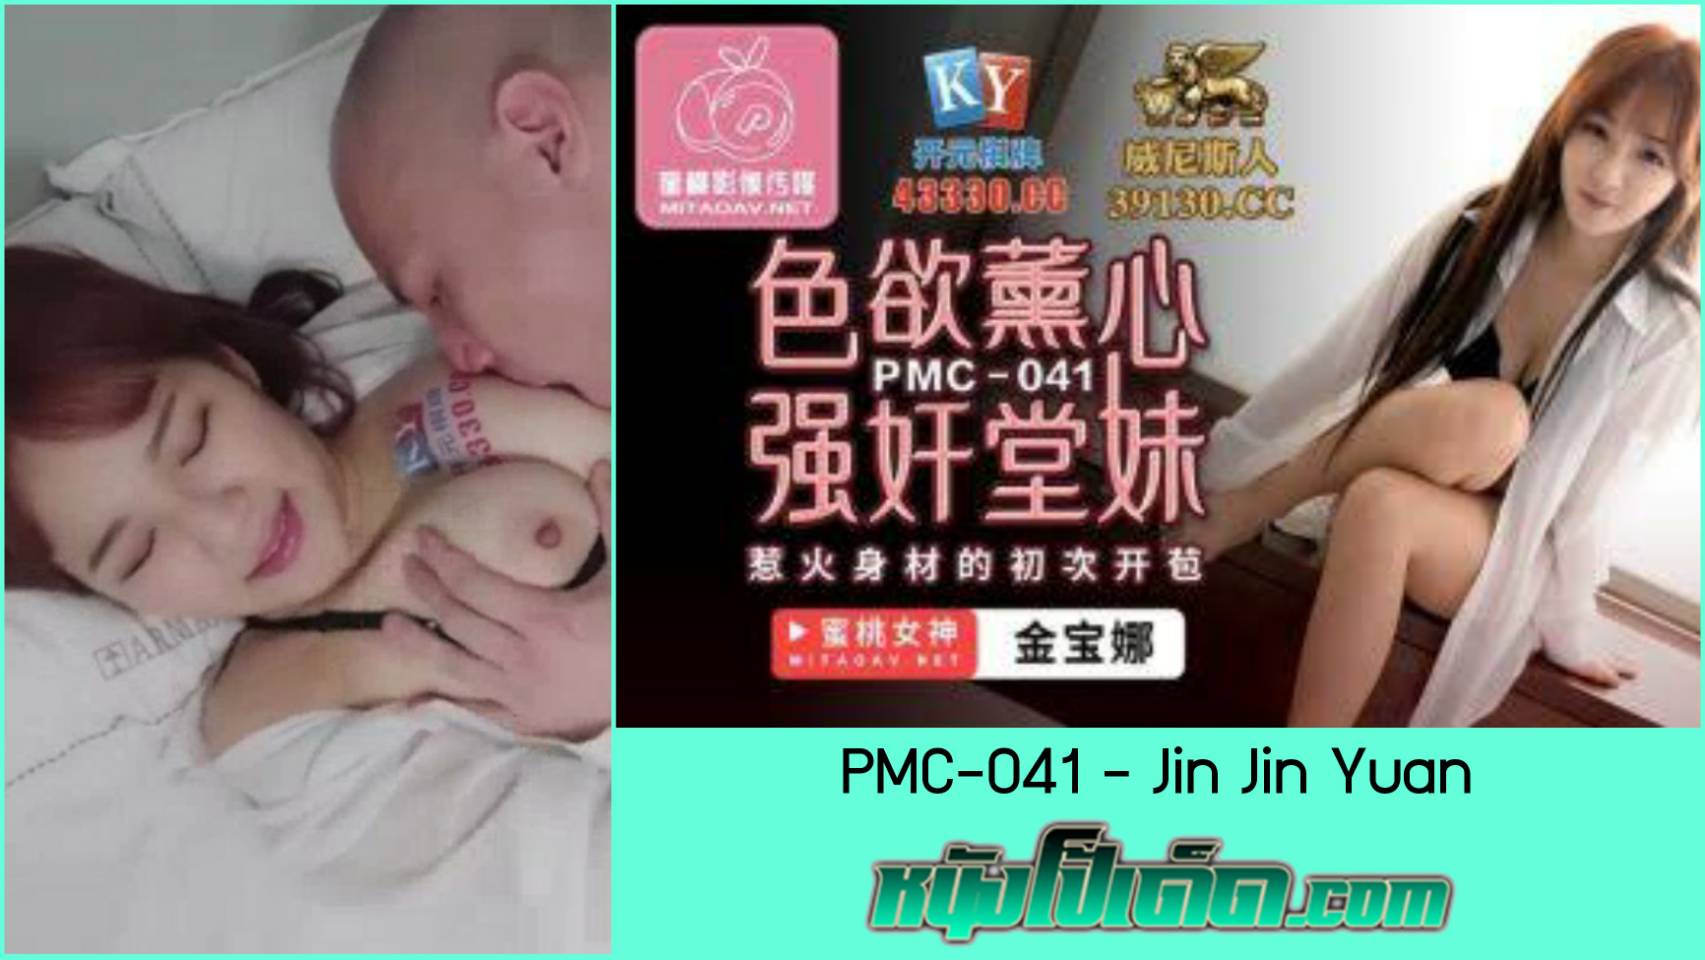 PMC-041 หนังเอ็ก AV จีนไม่เซ็นเซอร์ Chinese Porn เย็ดลูกพี่ลูกน้องแก้เงี่ยน Jin Jin Yuan ชวนขึ้นเตียงมาเสียวหี หน้าตาดีโดนกระแทกหีรัวๆ หลังอมควยหีเกือบแหก พี่ควยใหญ่เย็ดไม่หยุด